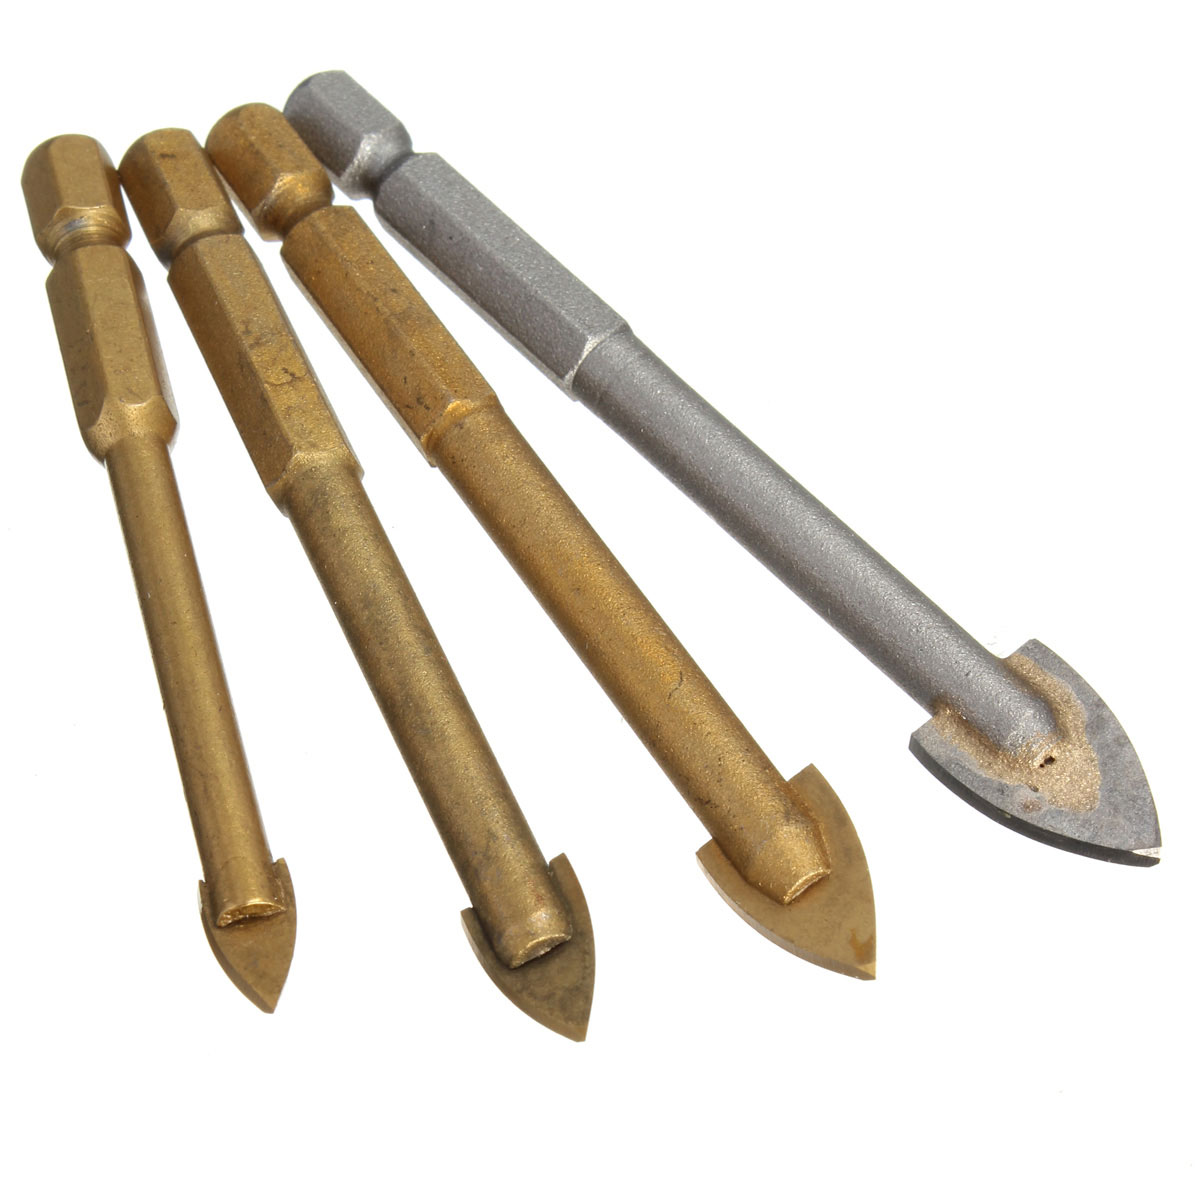 6-12mm-Carbide-Tile-Spear-Head-Drill-Bit-Glass-Drill-Hole-Tool-Tungsten-Carbide-Tipped-Bit-978952-5